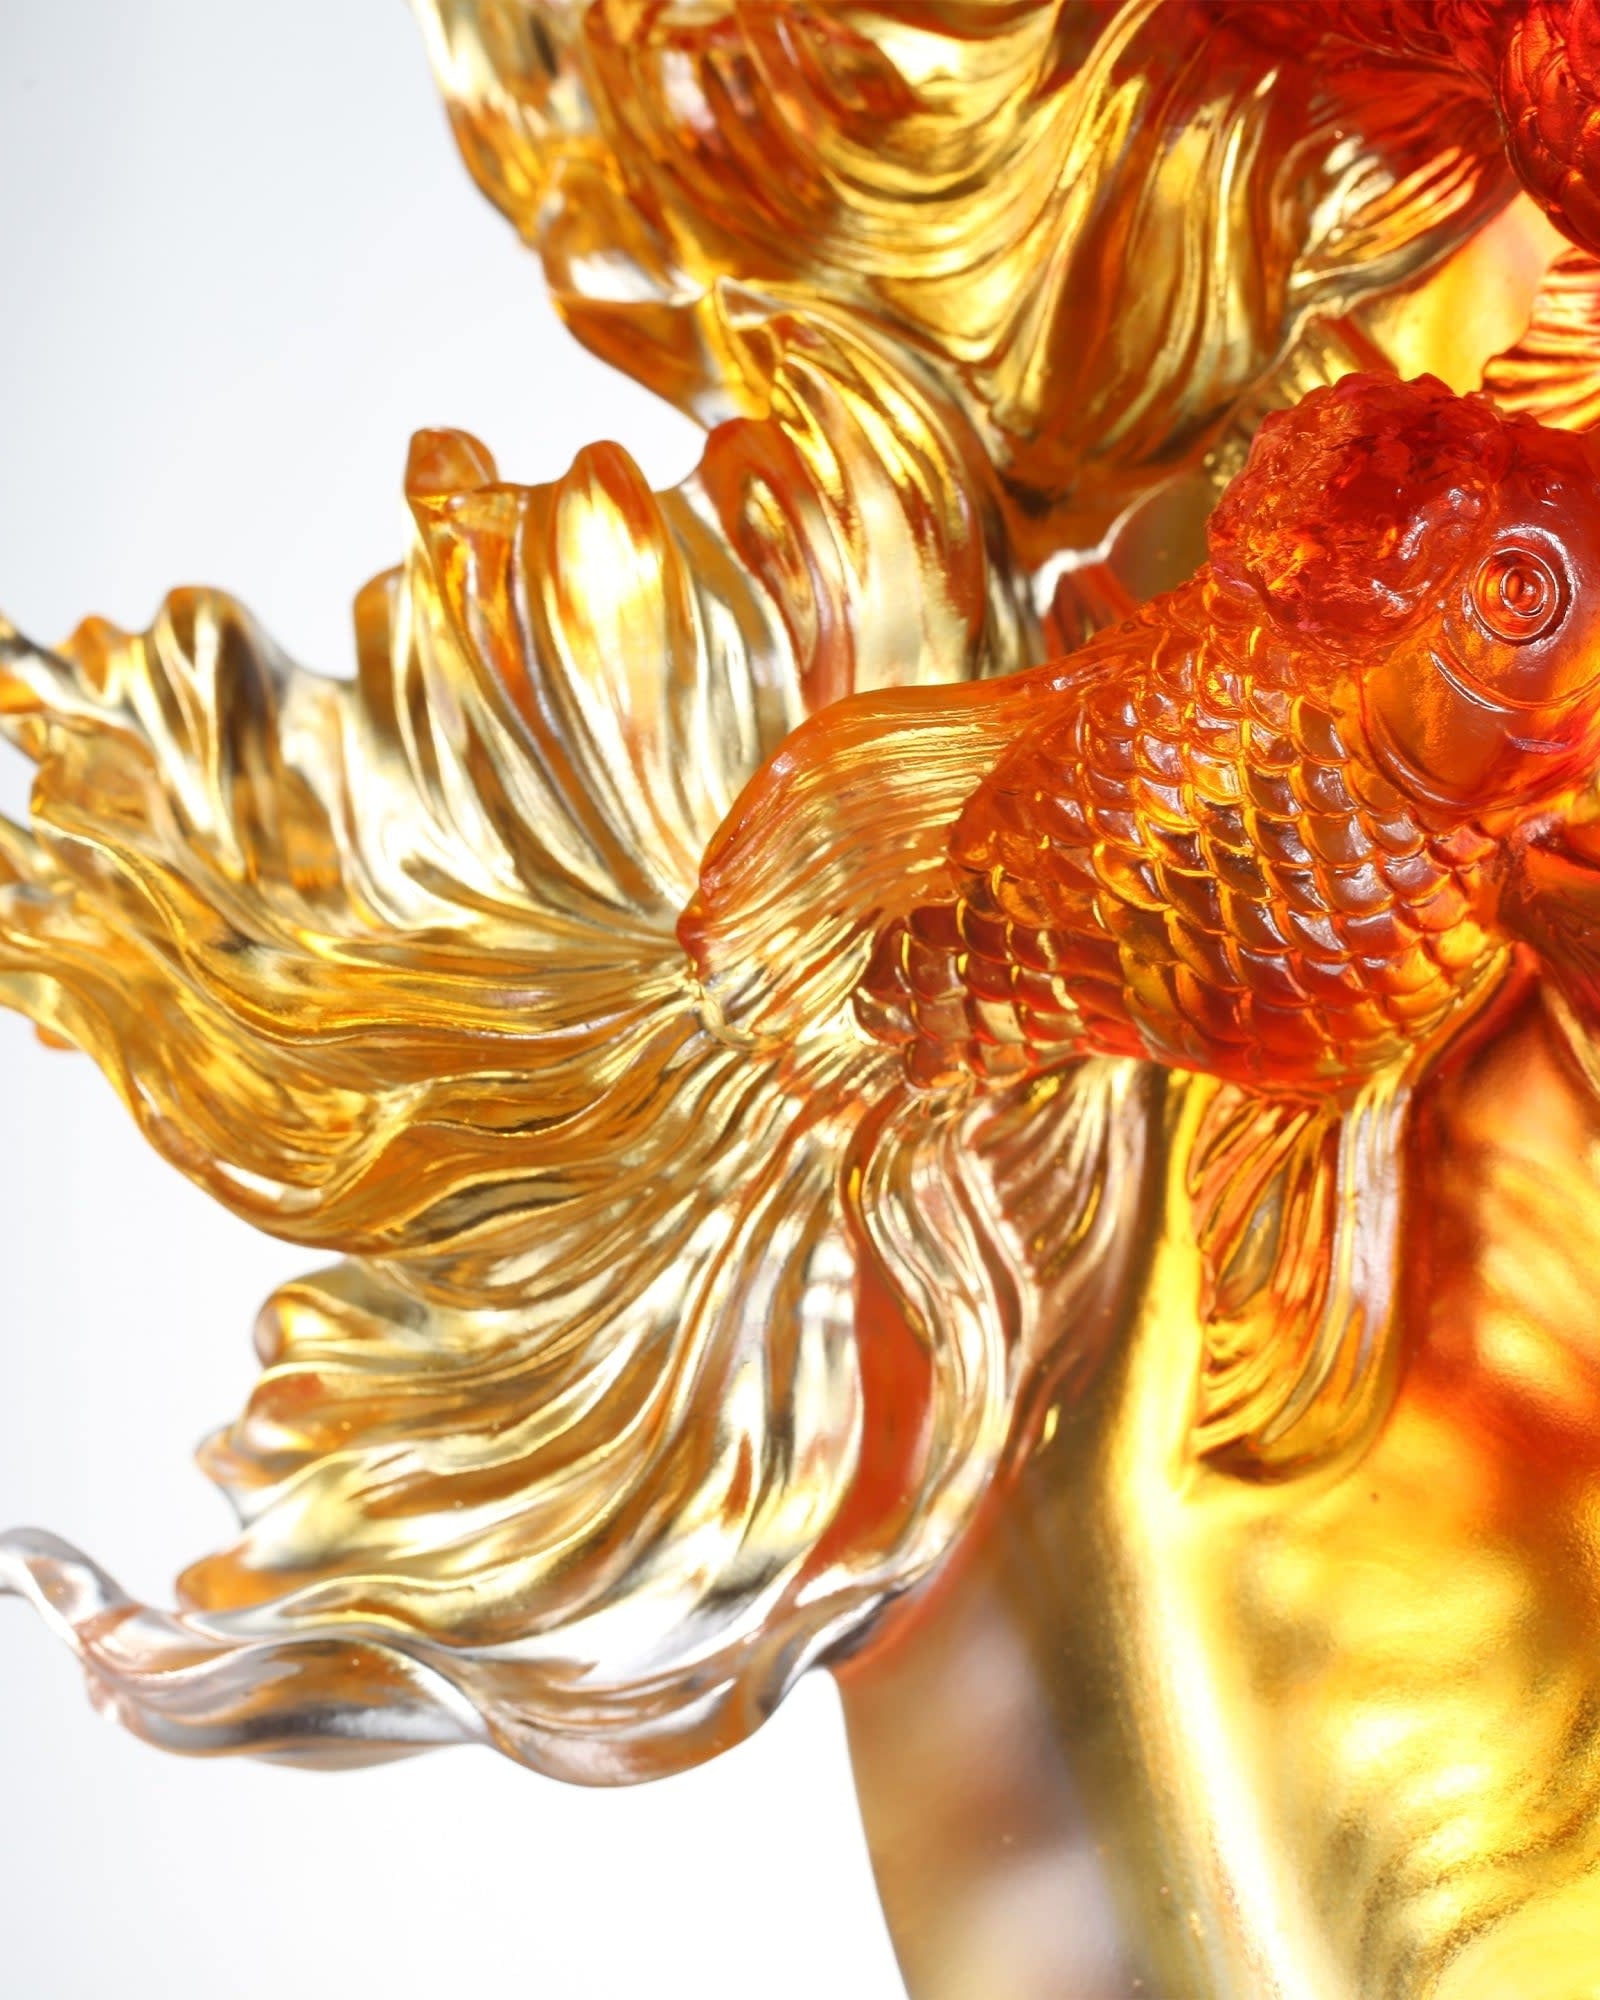 LIULI Crystal Art Crystal Koi Fish Sculpture, "In Celebration"